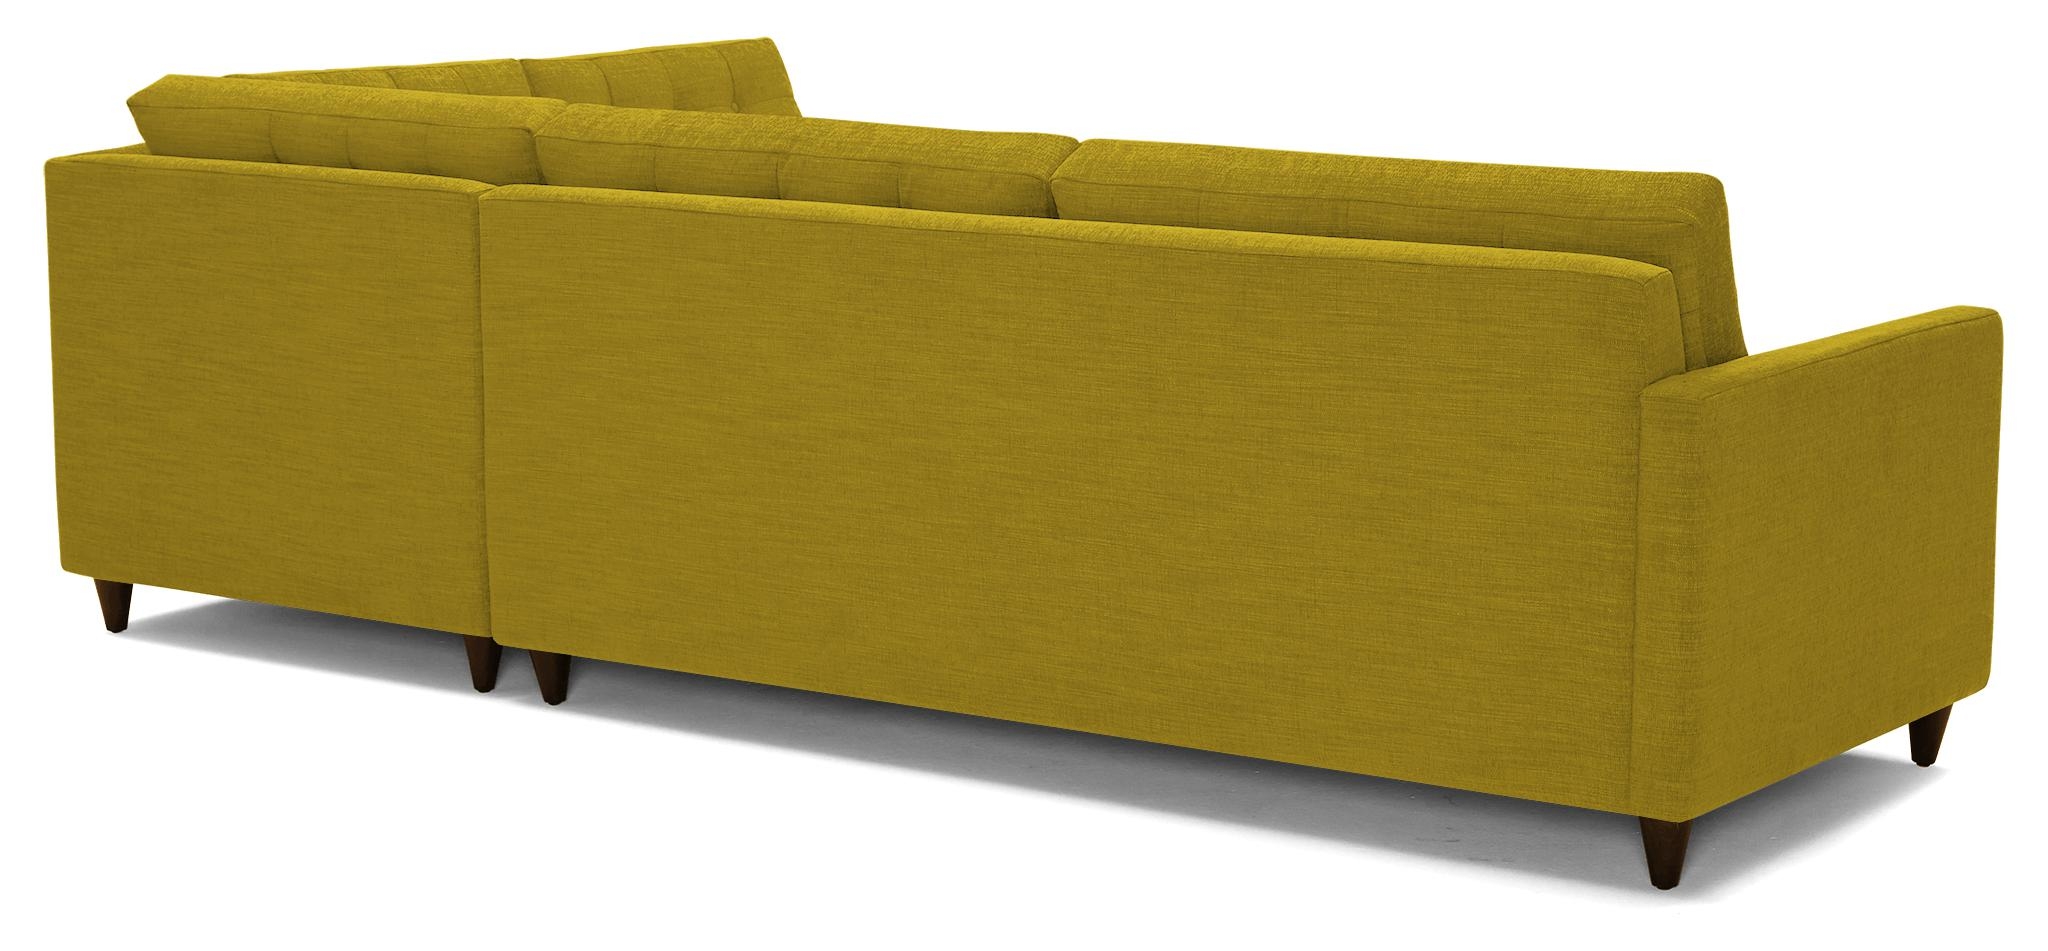 Yellow Eliot Mid Century Modern Bumper Sleeper Sectional - Bloke Goldenrod - Mocha - Right  - Image 3